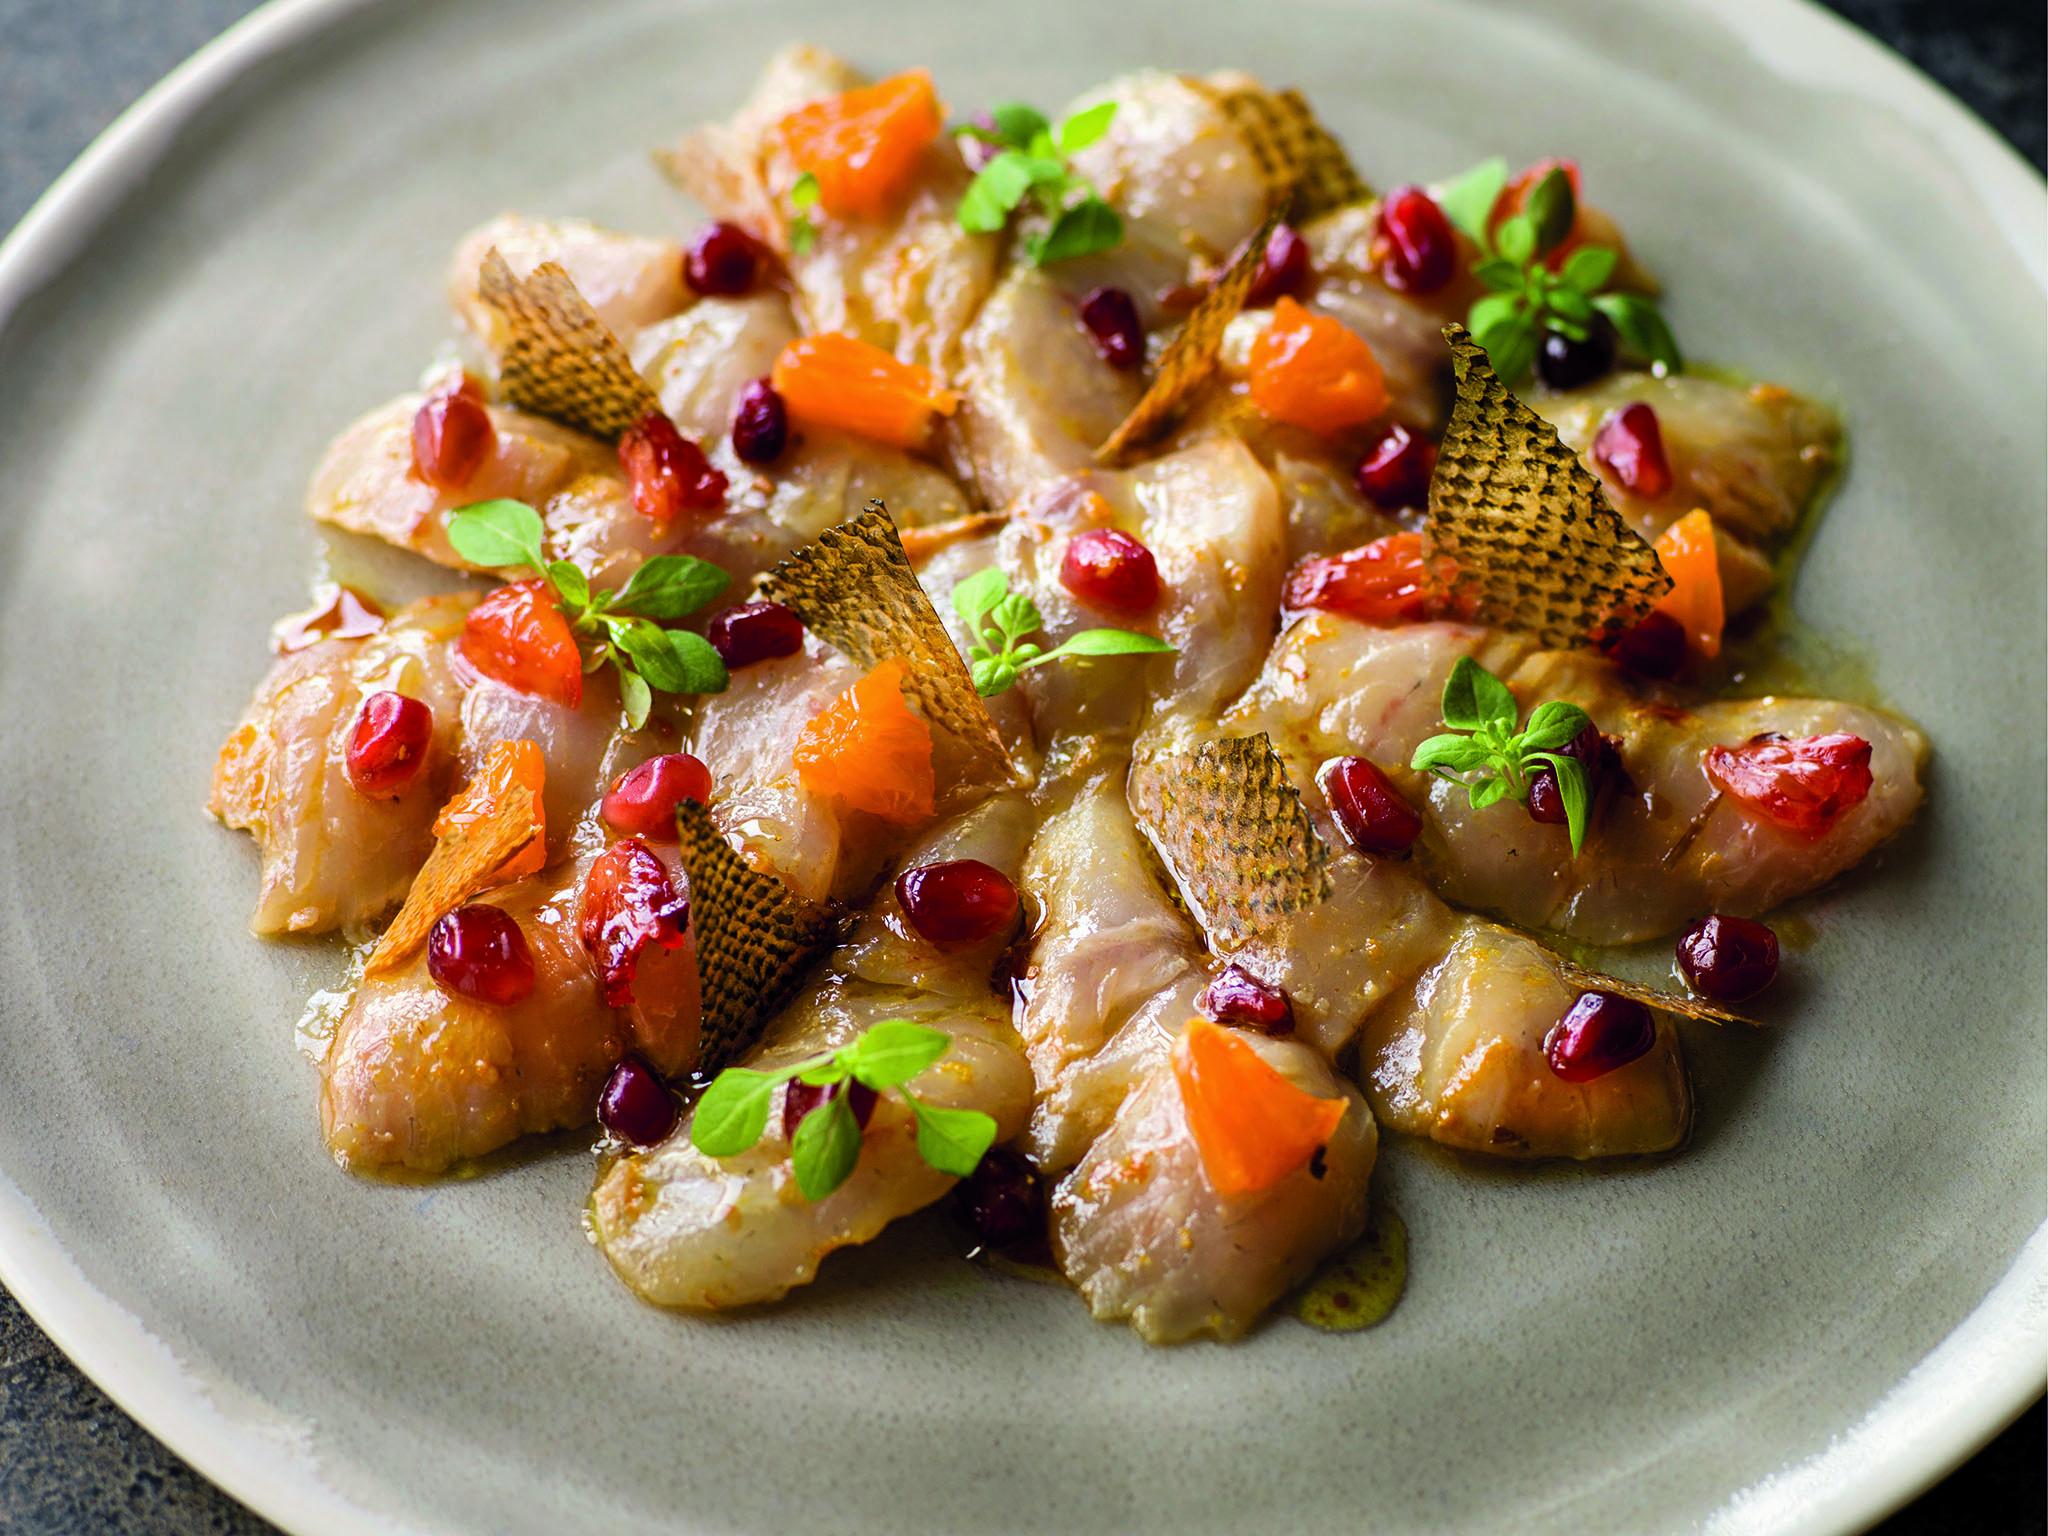 Put it to the test: seabass ceviche recipe below